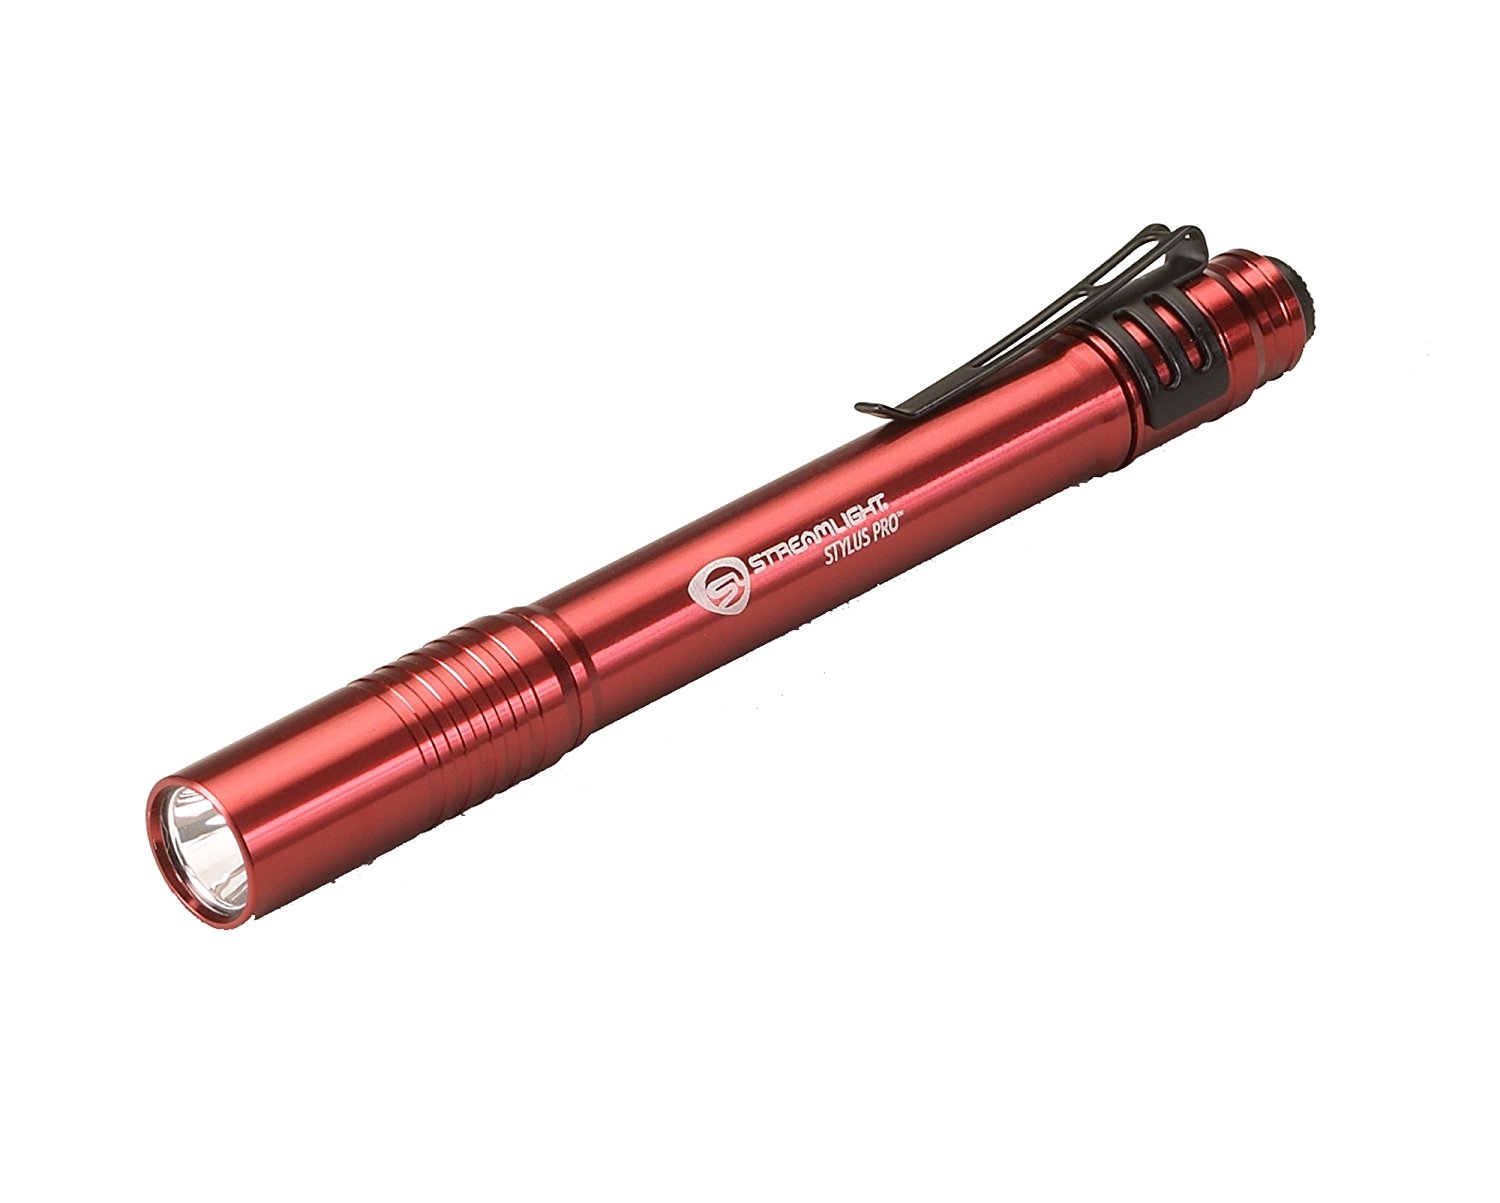 streamlight 66120 stylus pro penlight with white led and holster red 100 lumens led flashlight amazon com